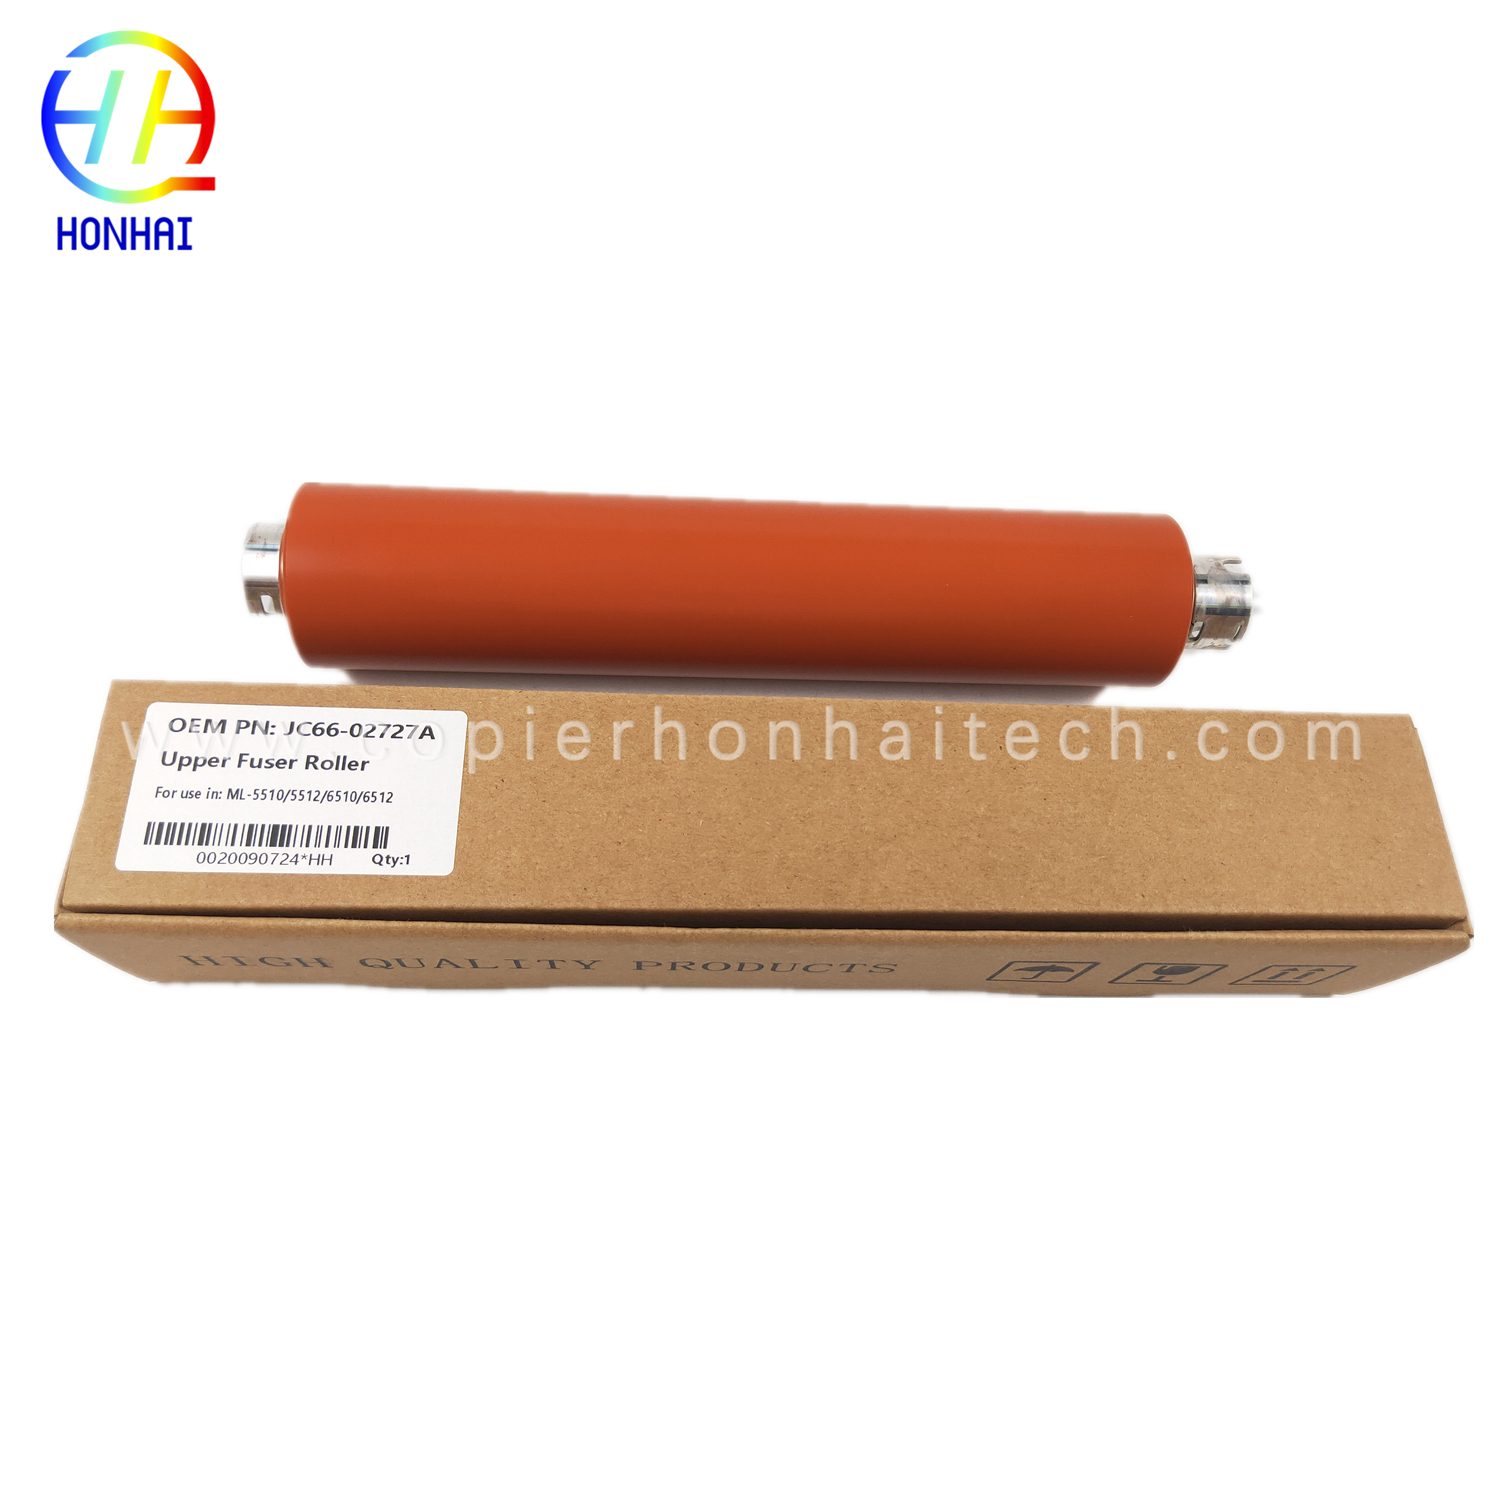 Original Upper Fuser Roller for Samsung ML-5510 ML-5512 ML-5515 JC66-02727A